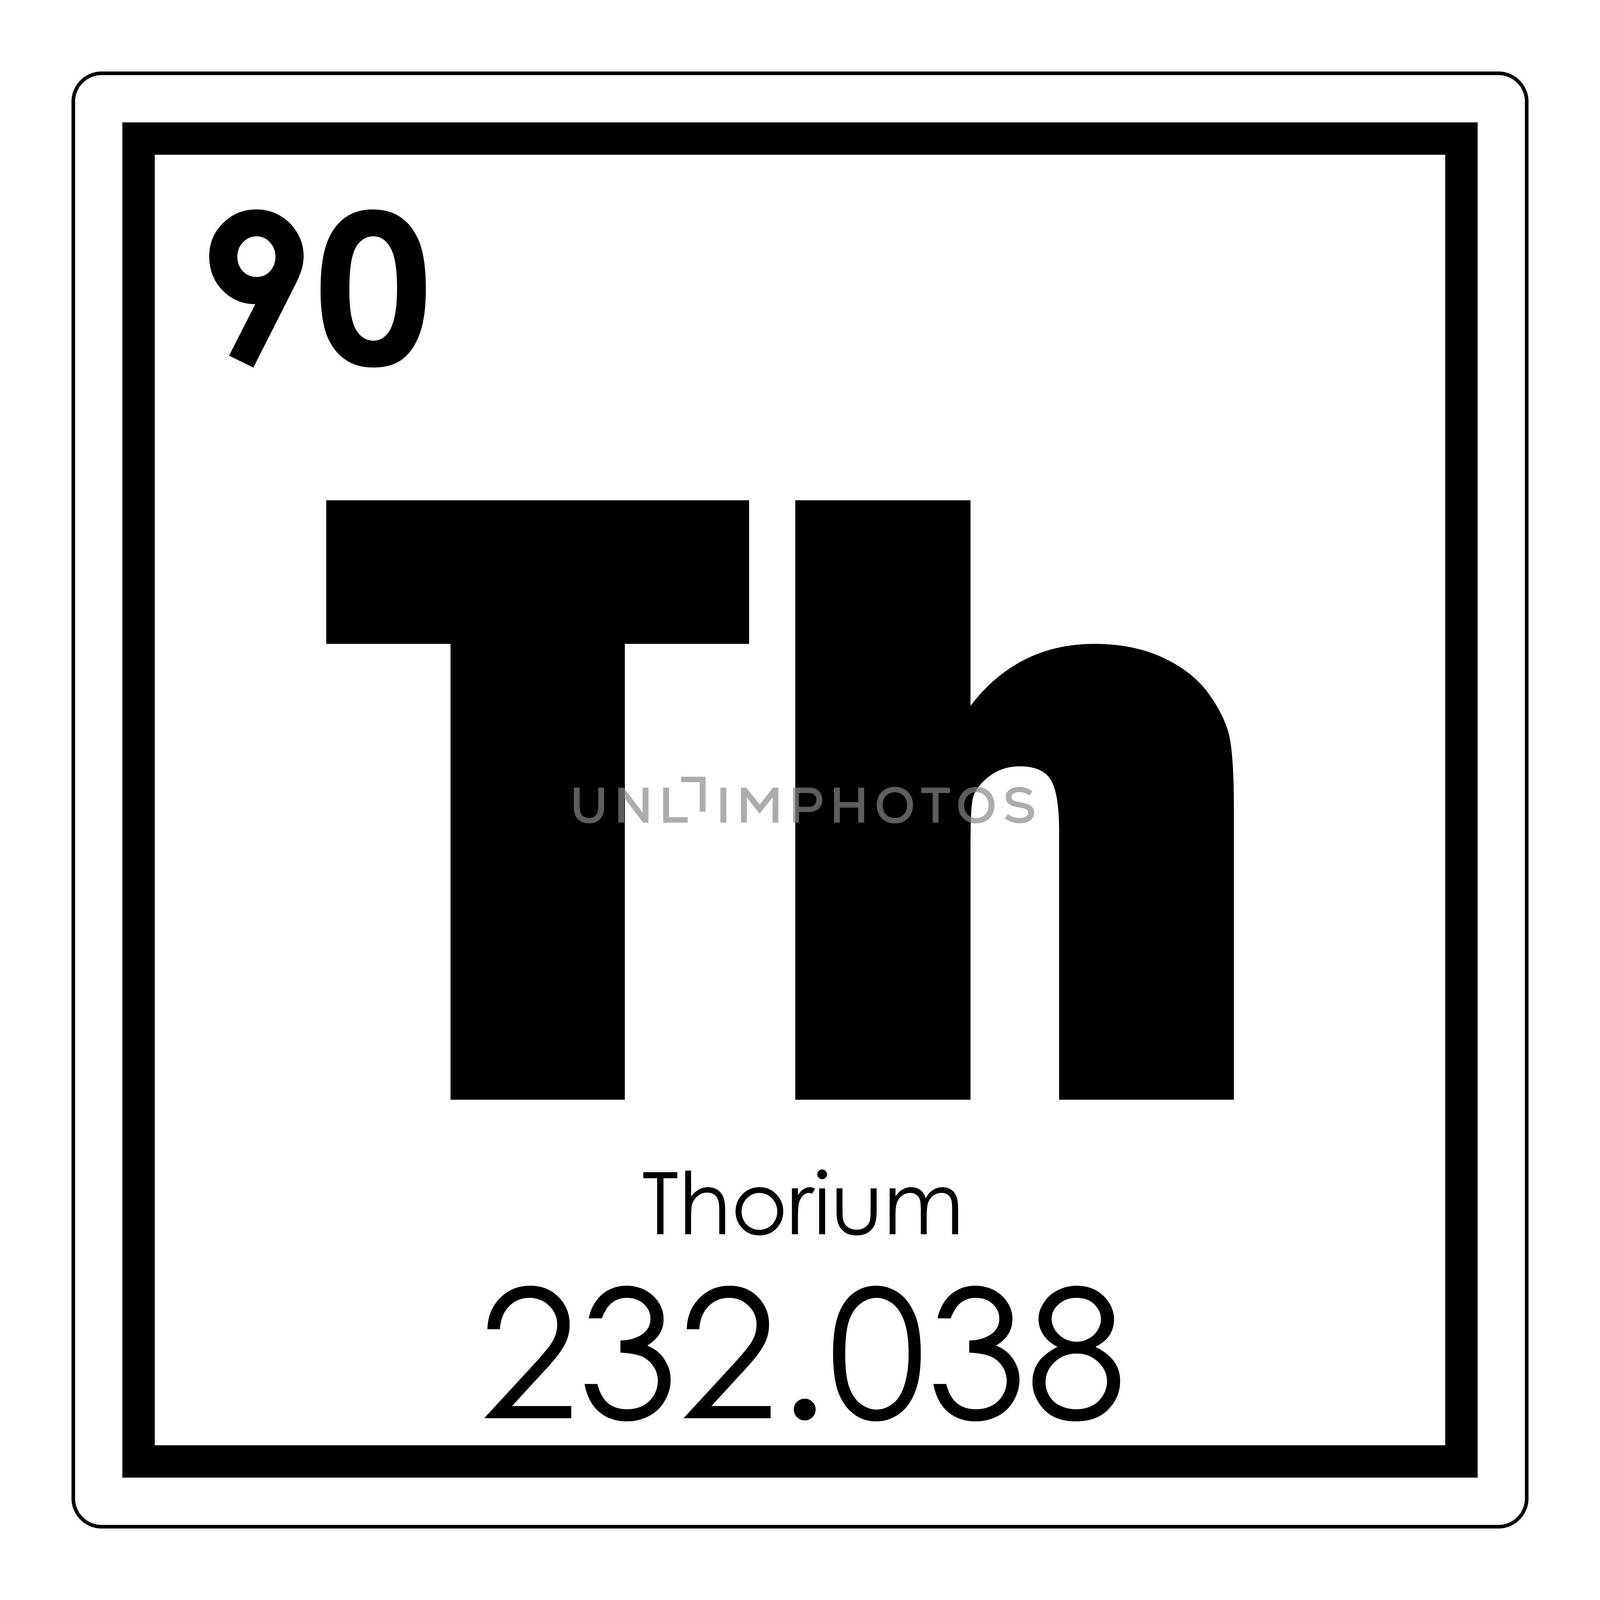 Thorium chemical element by tony4urban